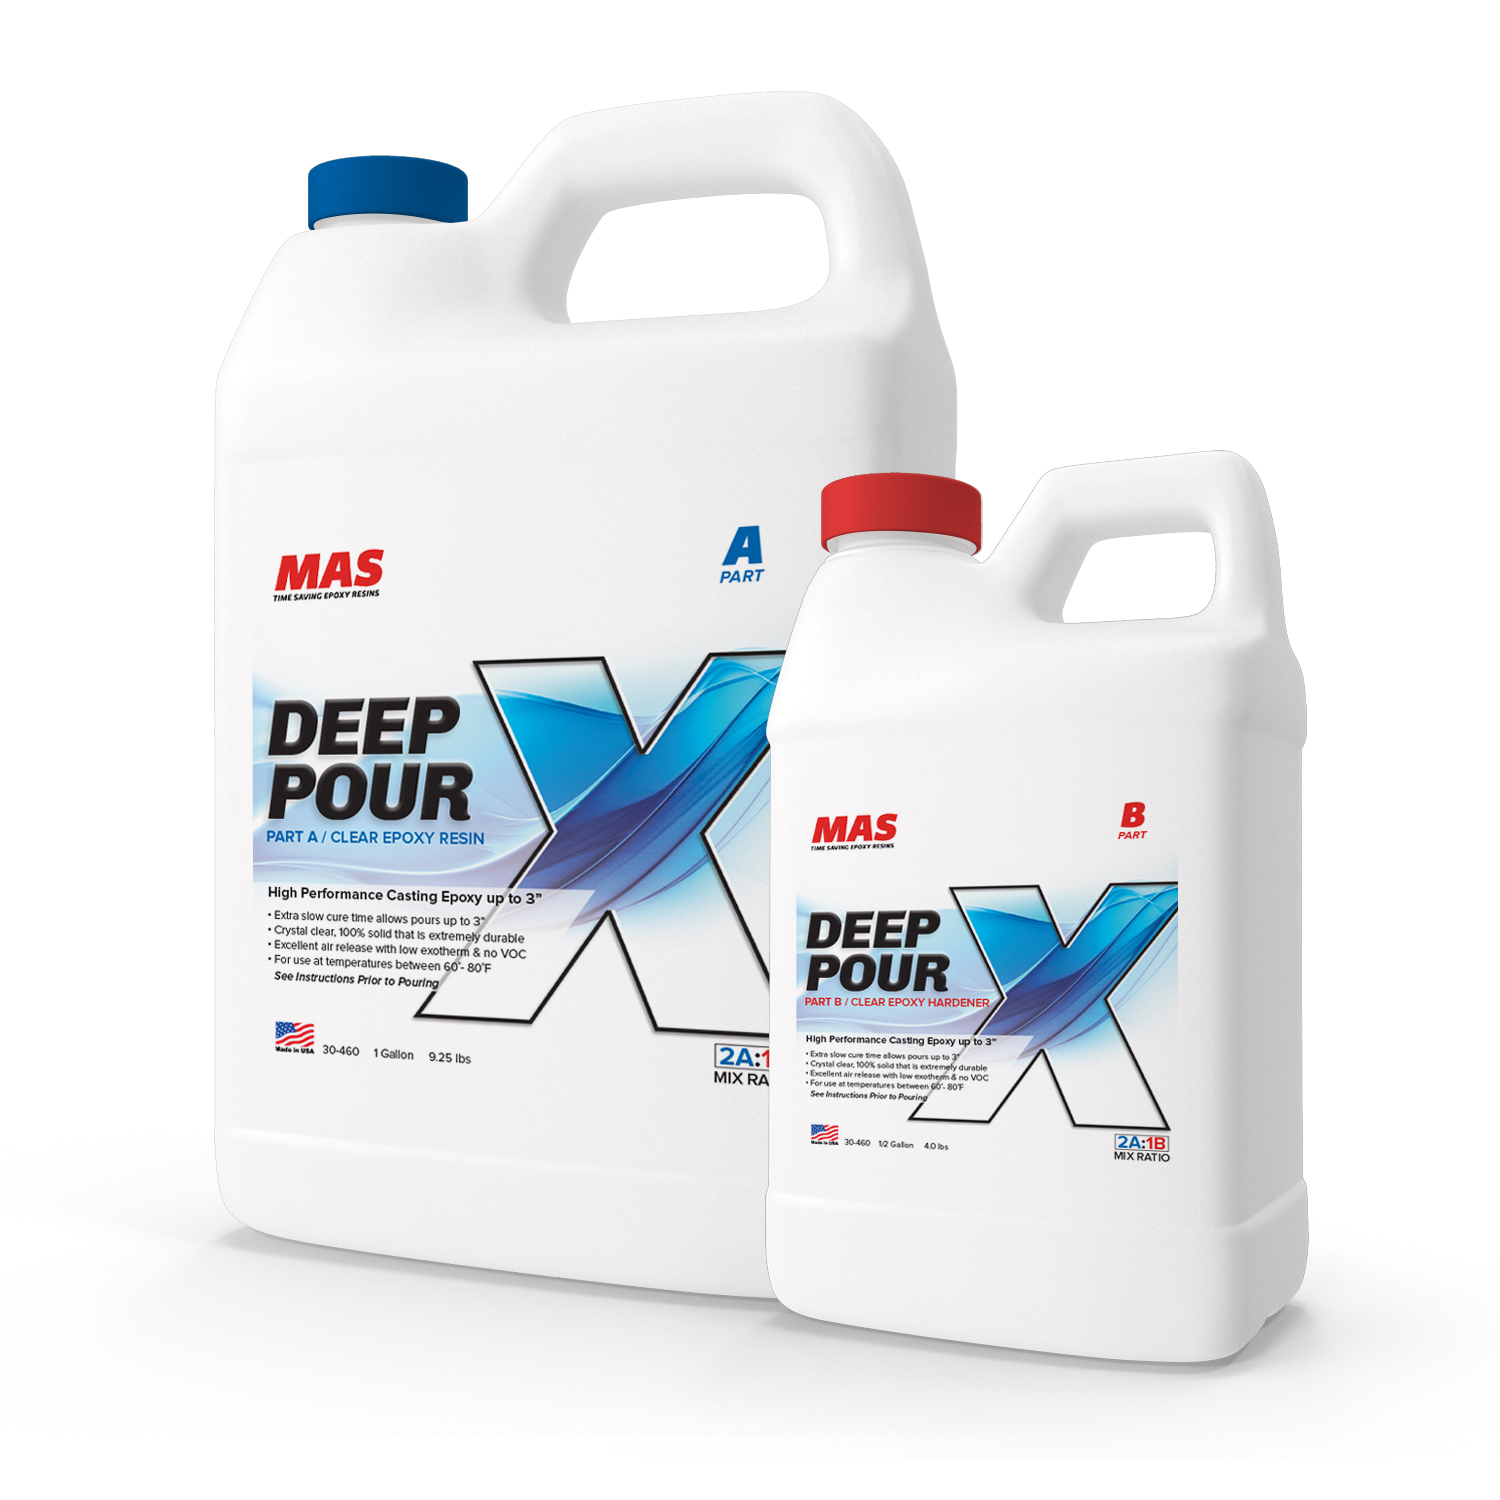 can you mix MAS Deep Pour X with MAS Deep Pour